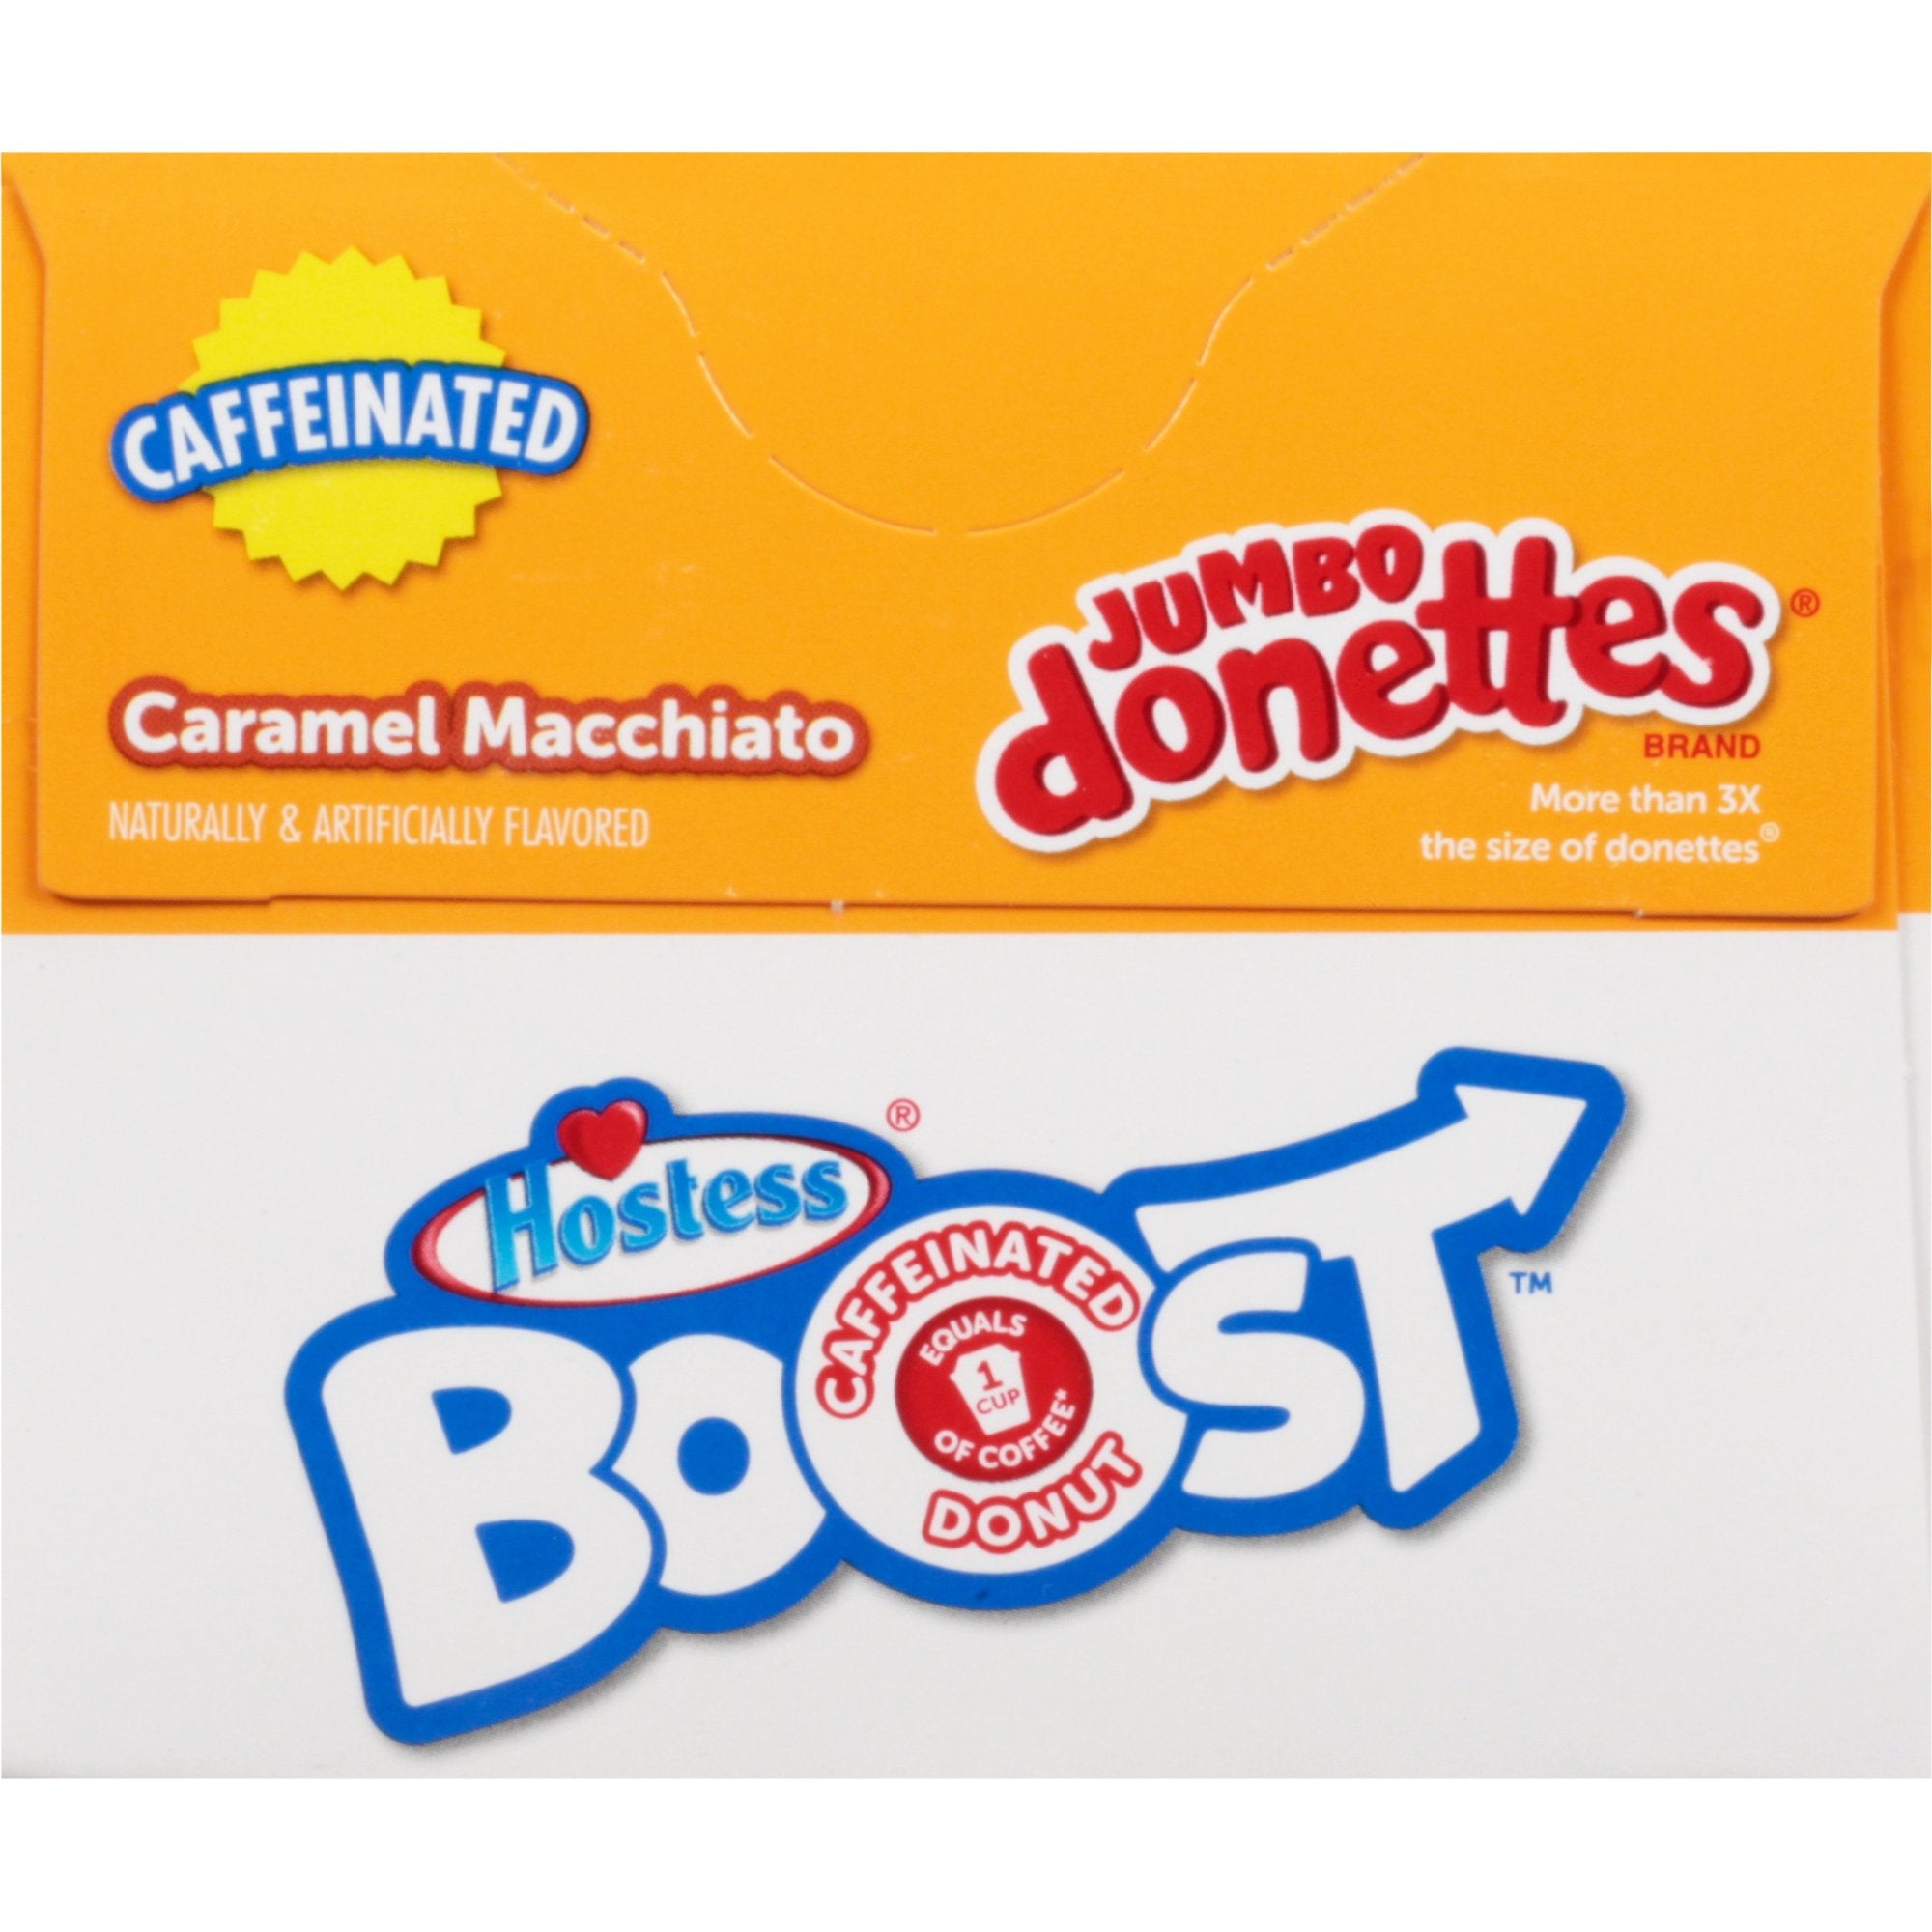 Discount Hostess Boost Caffeinated Jumbo Donut, Caramel Macchiato, 2.5 Oz, Box Of 9 Doughnuts